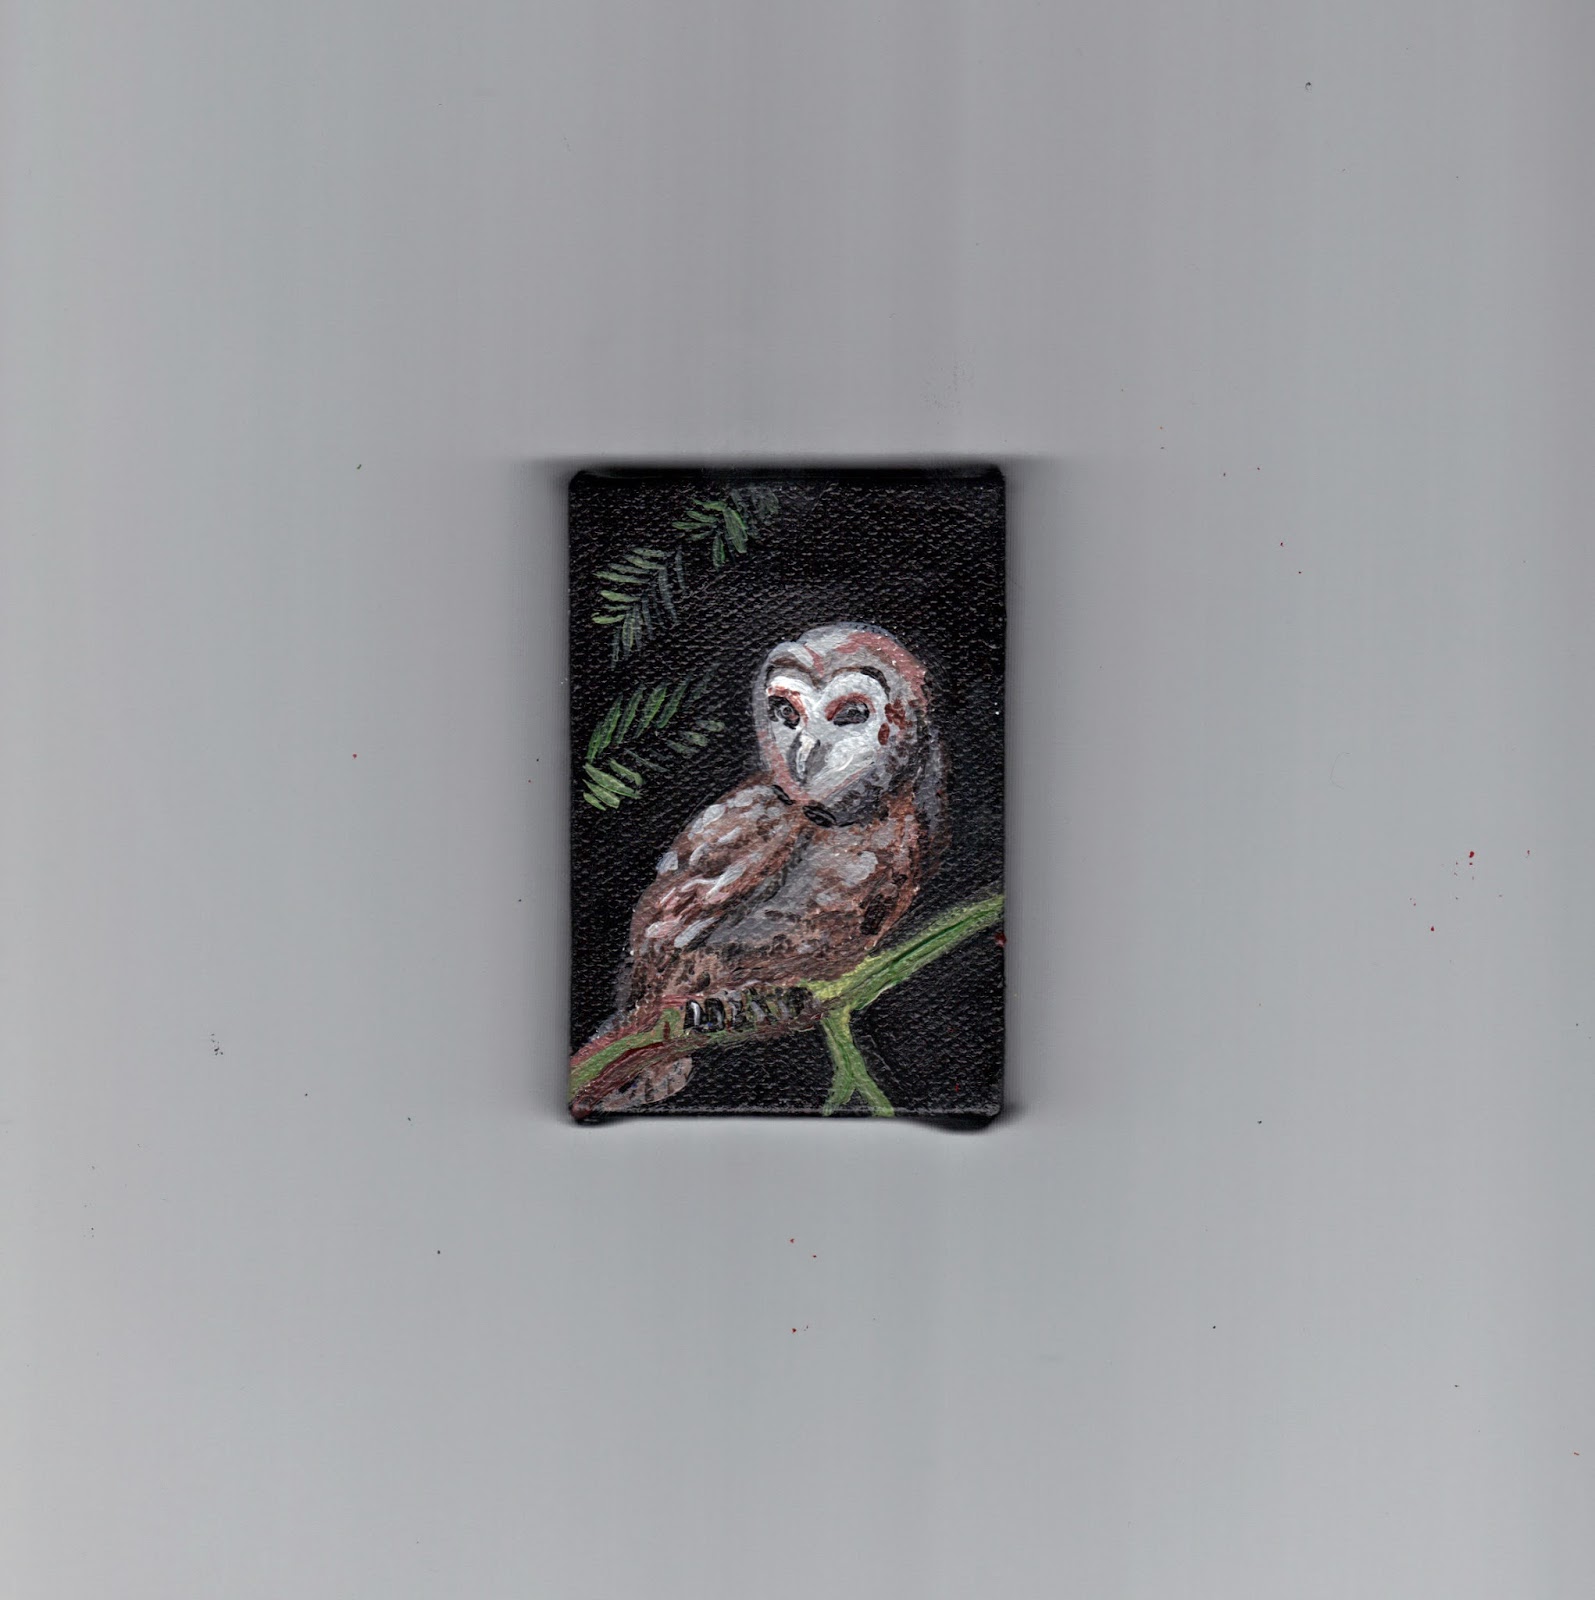 https://www.etsy.com/listing/186370813/spooky-owl-original-miniature-painting?ref=listing-shop-header-0